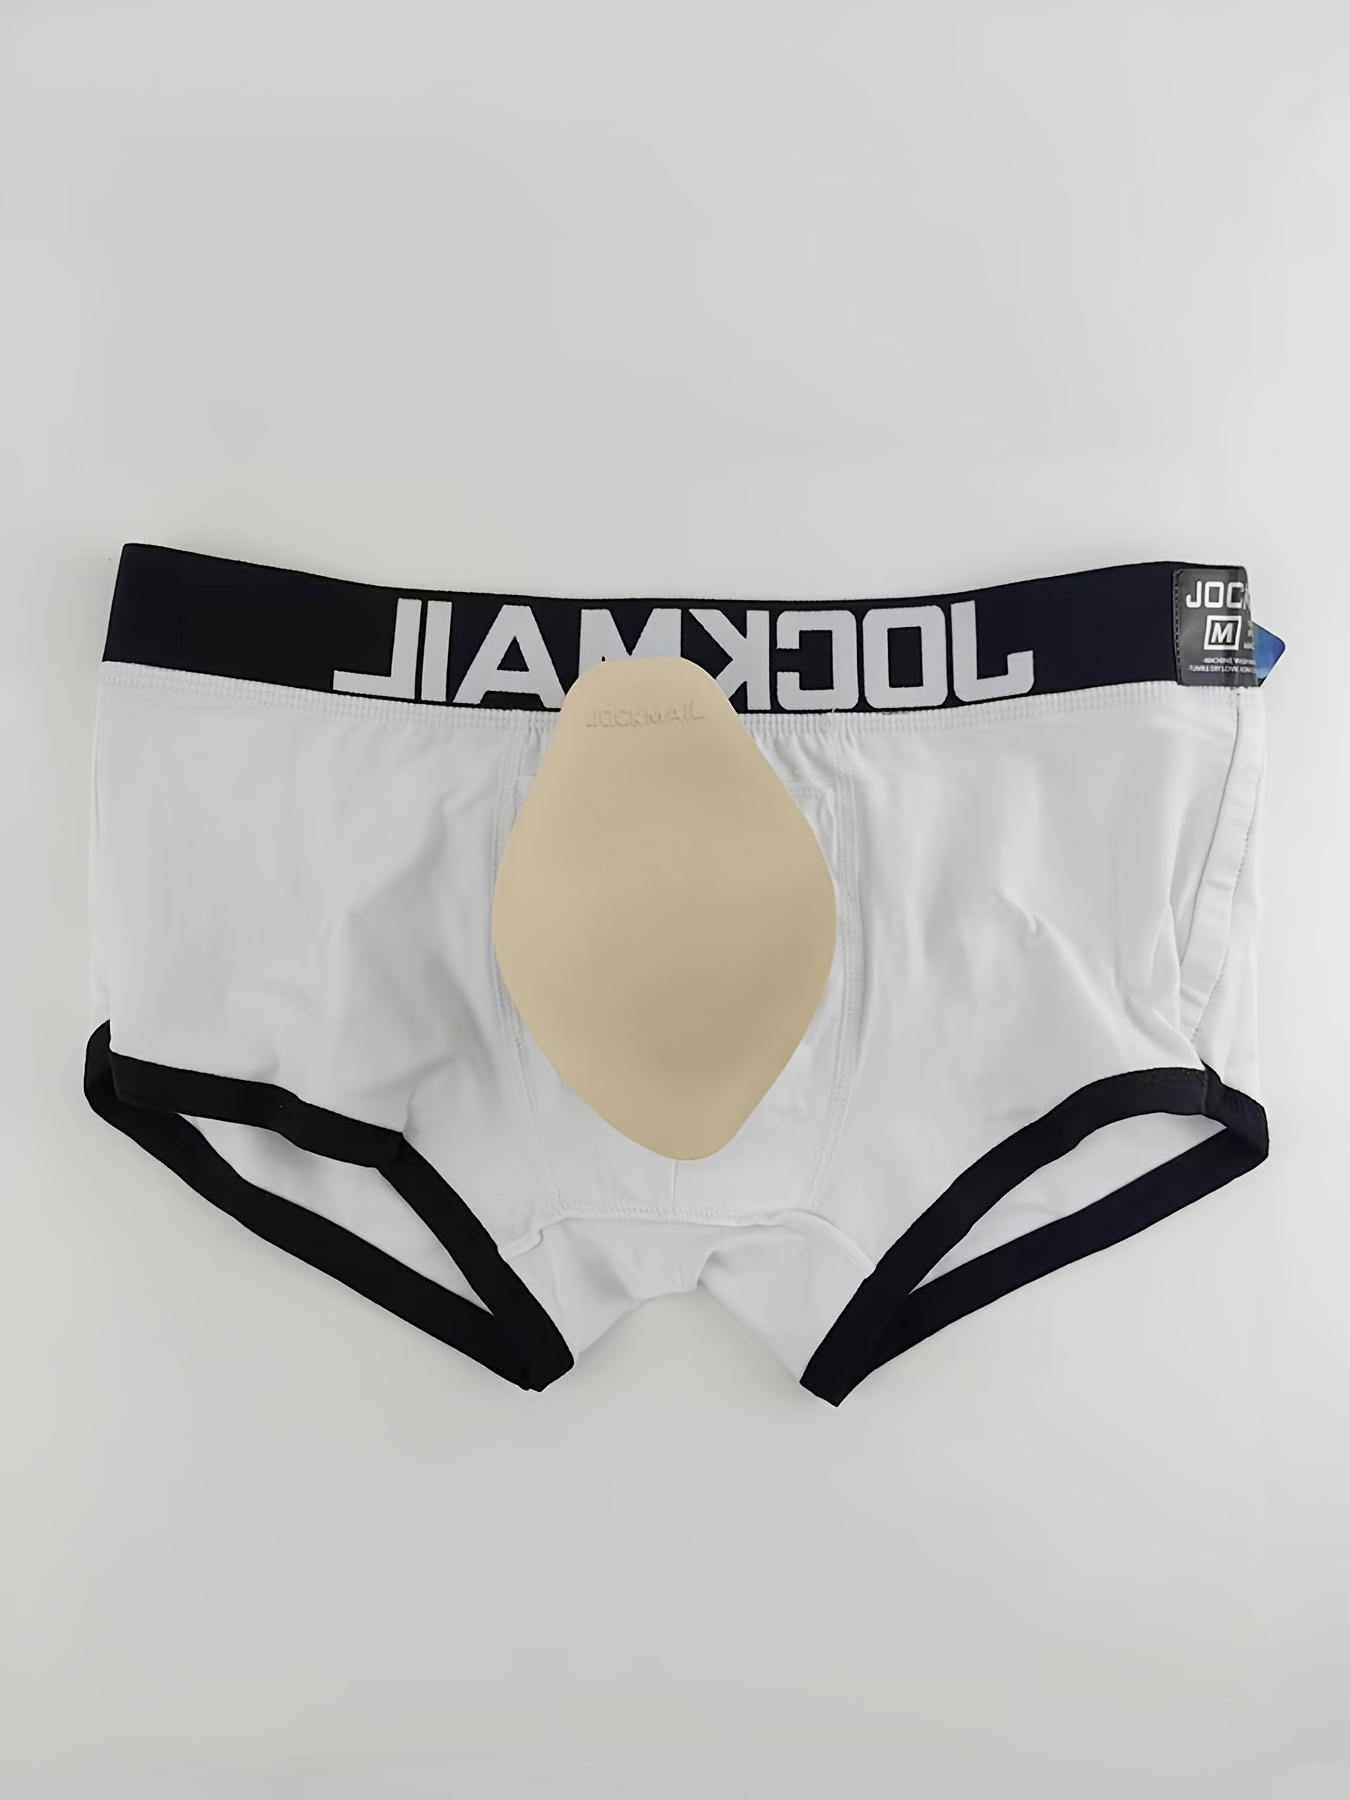 Men's JOCKMAIL JM435 - Butt Enhancement Boxer